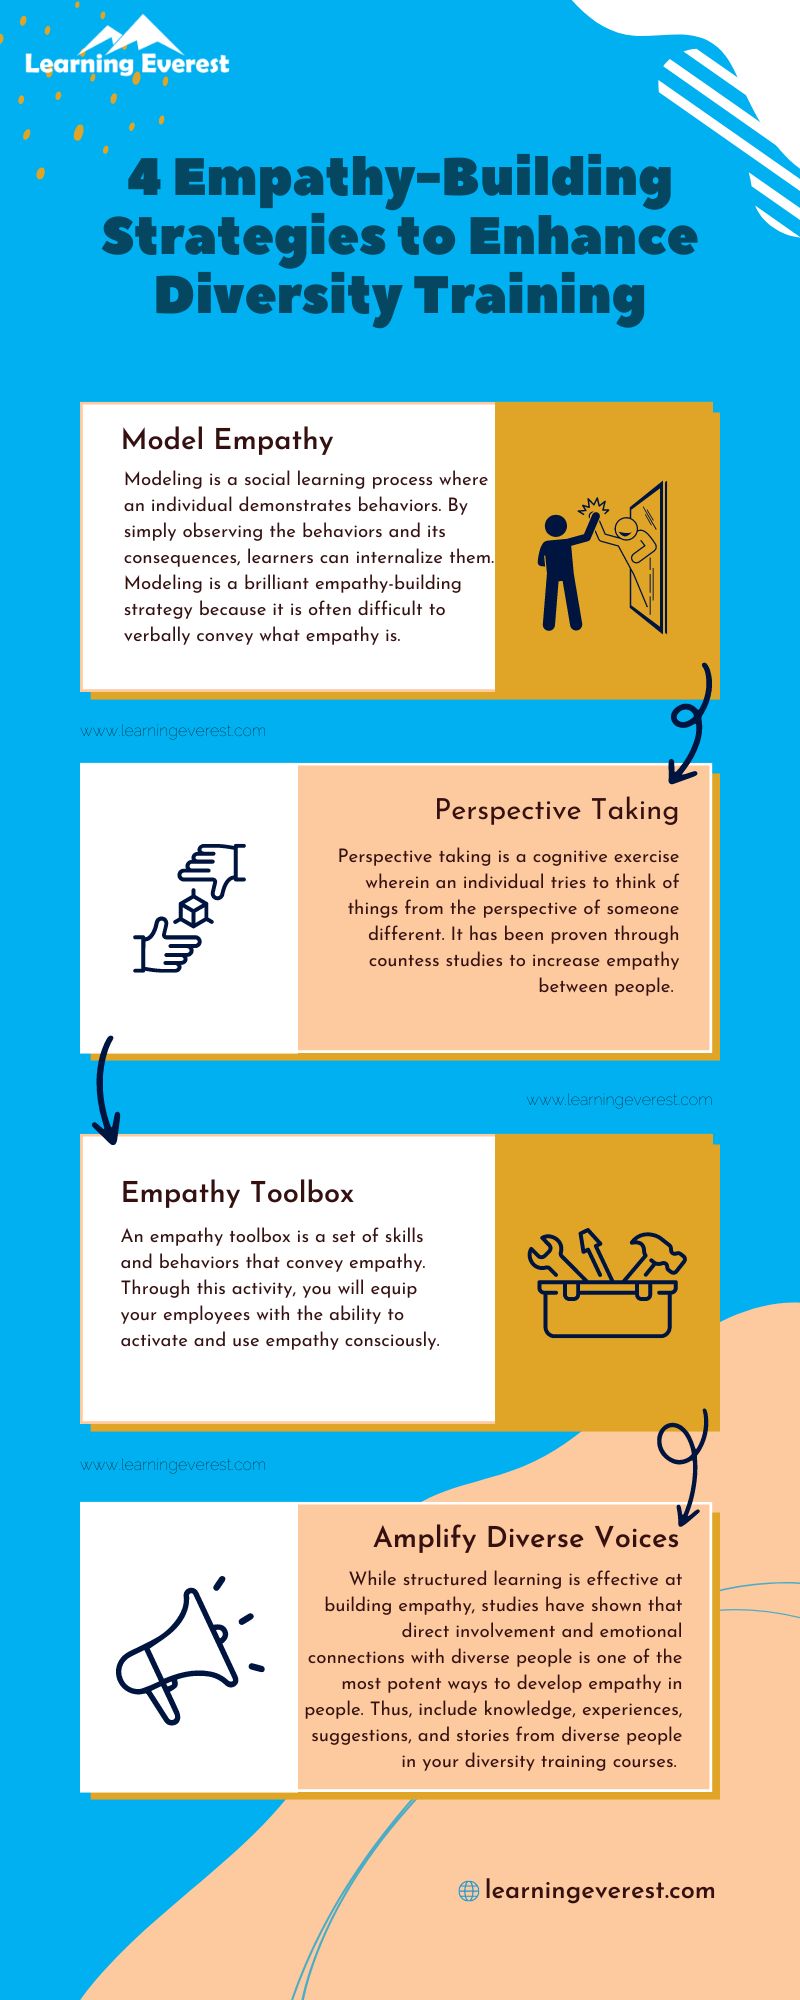 4 Essential Empathy-Building Strategies to Enhance Diversity Training